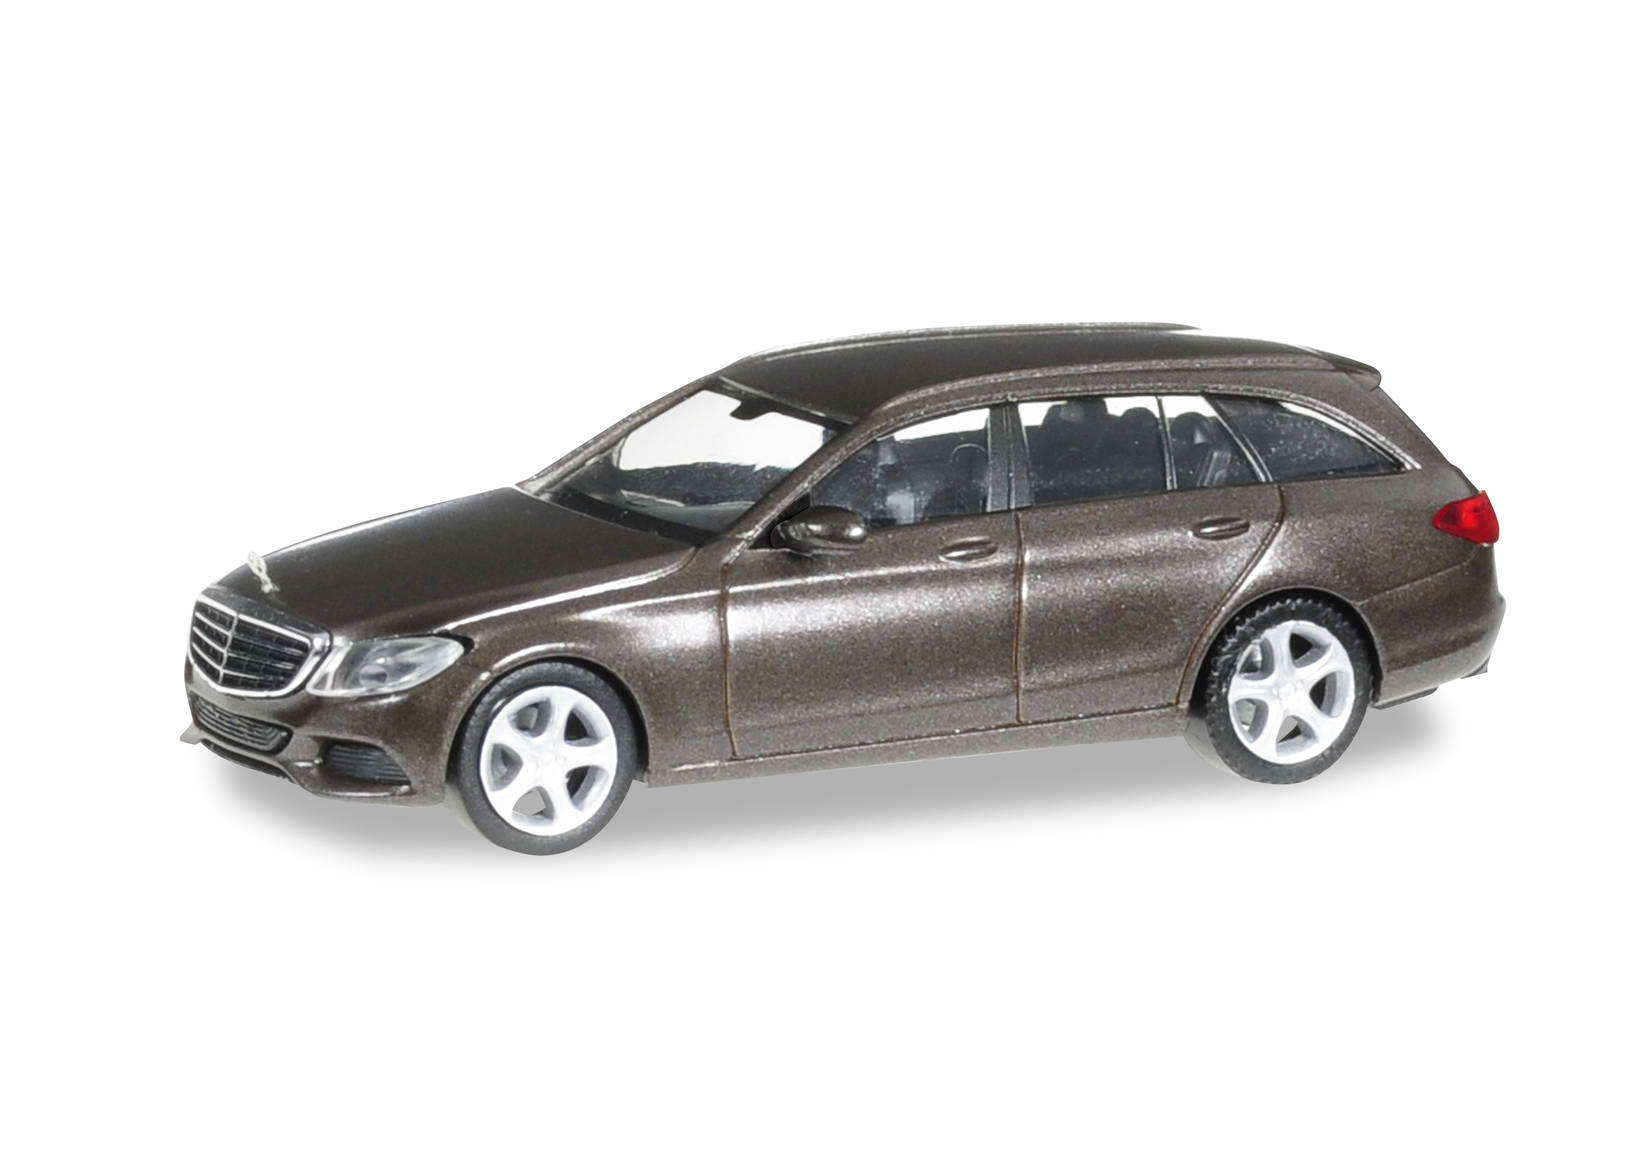 Mercedes-Benz C-Class T-Modell Elegance, dolomit brown metallic